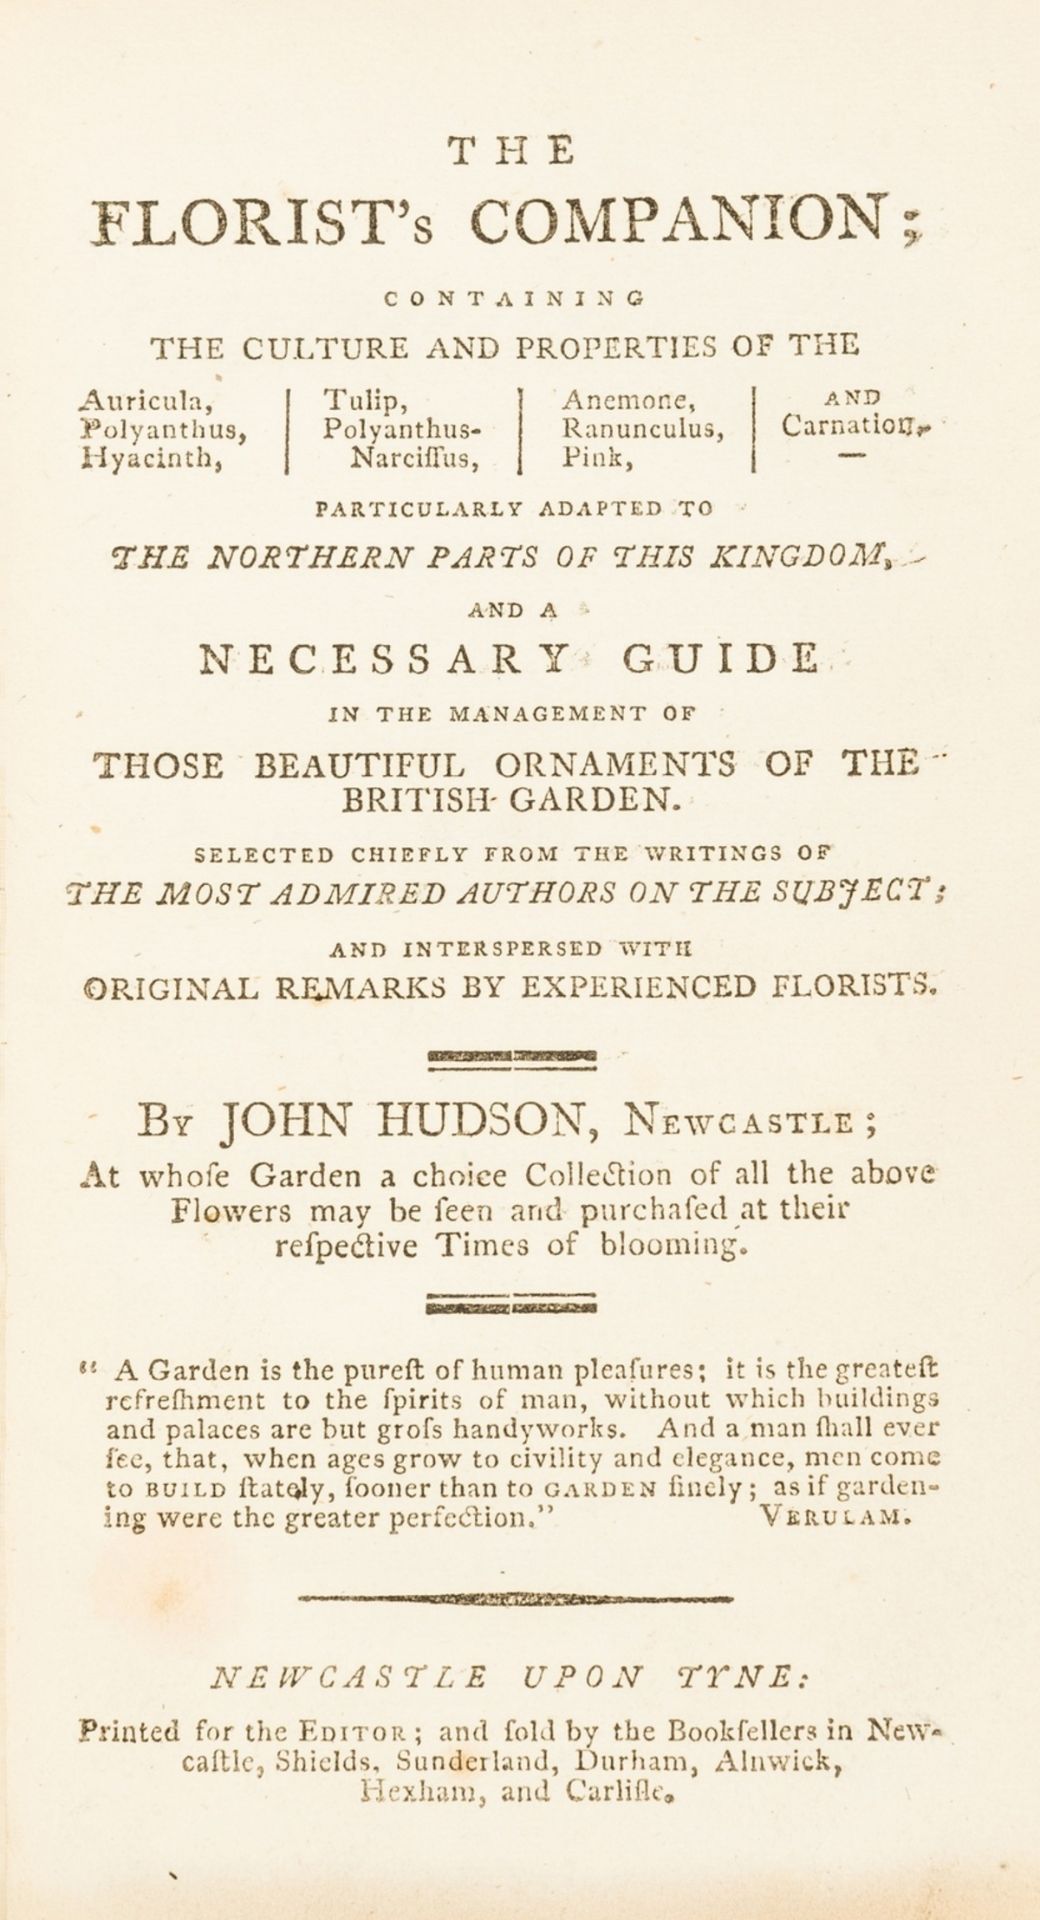 Hudson (John) The Florist's Companion, Newcastle upon Tyne, [1794].